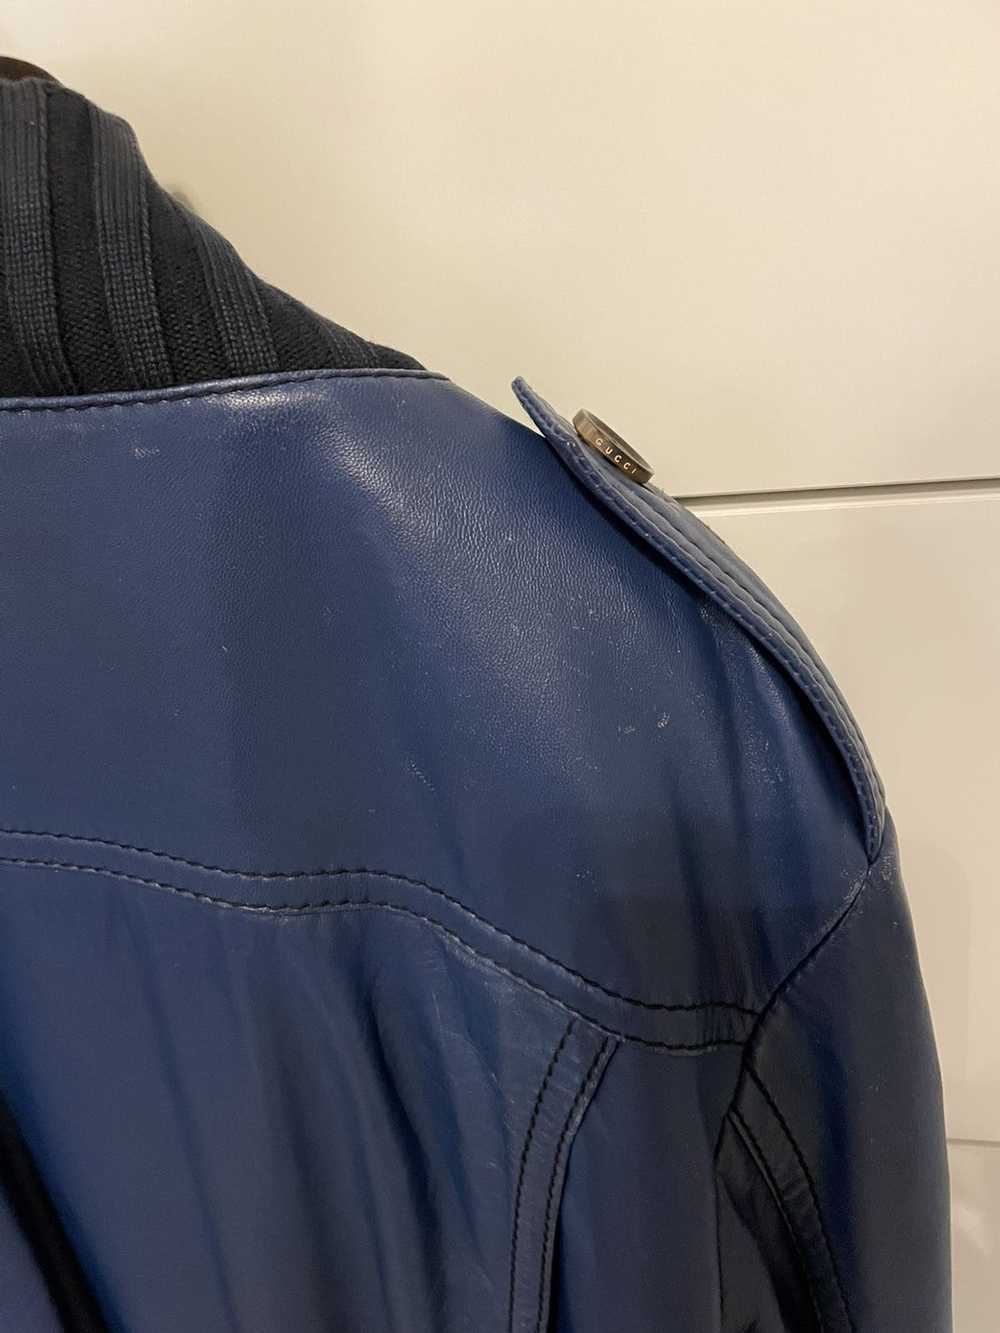 Gucci Gucci Madonna Leather Jacket - image 7